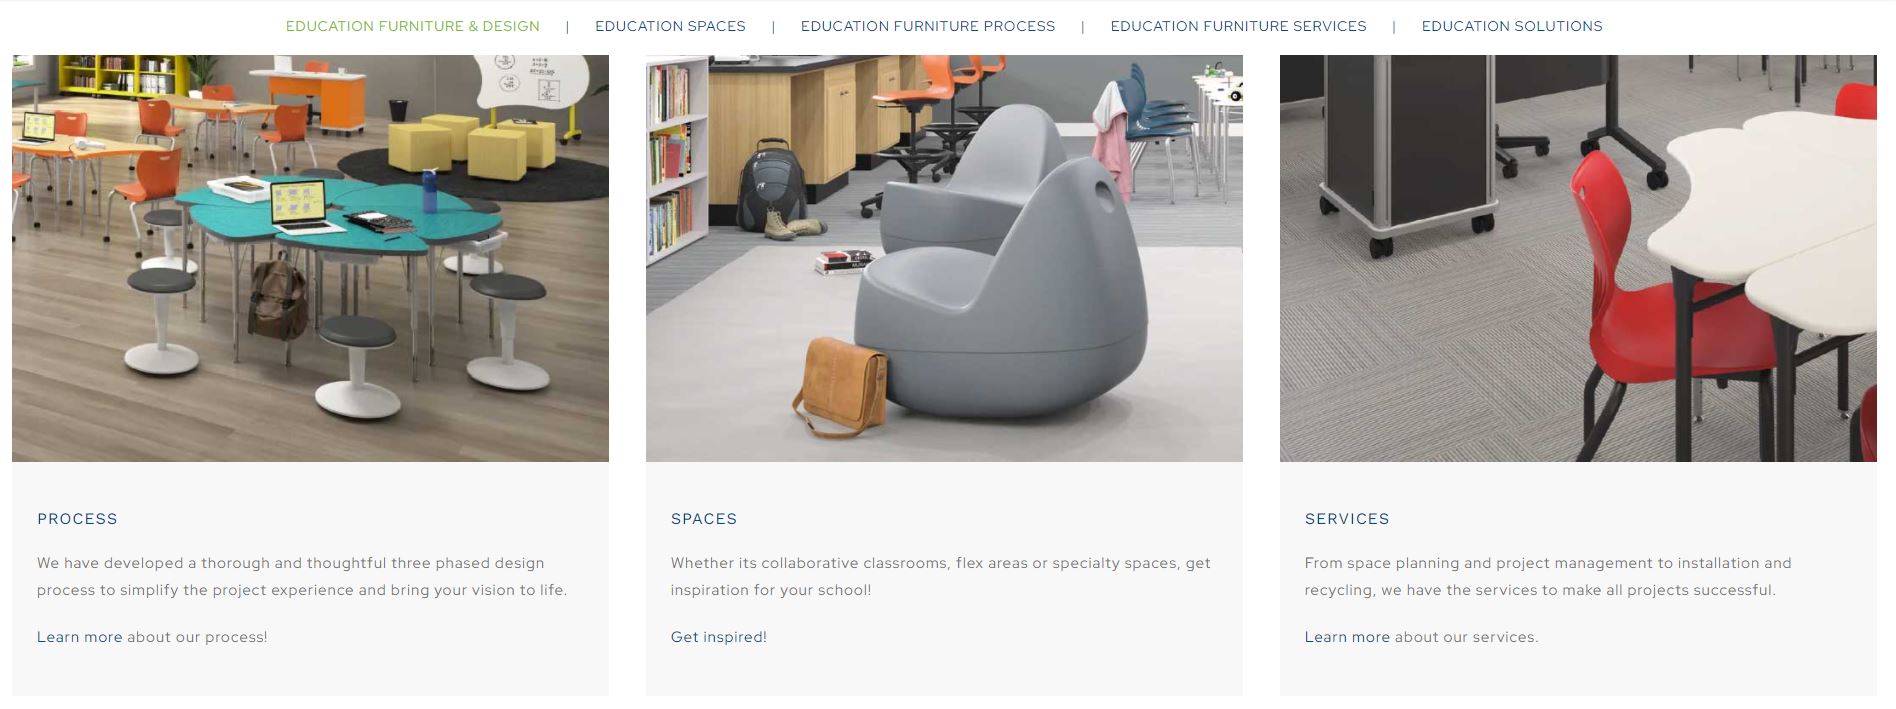 Education Furniture & Design Solutions